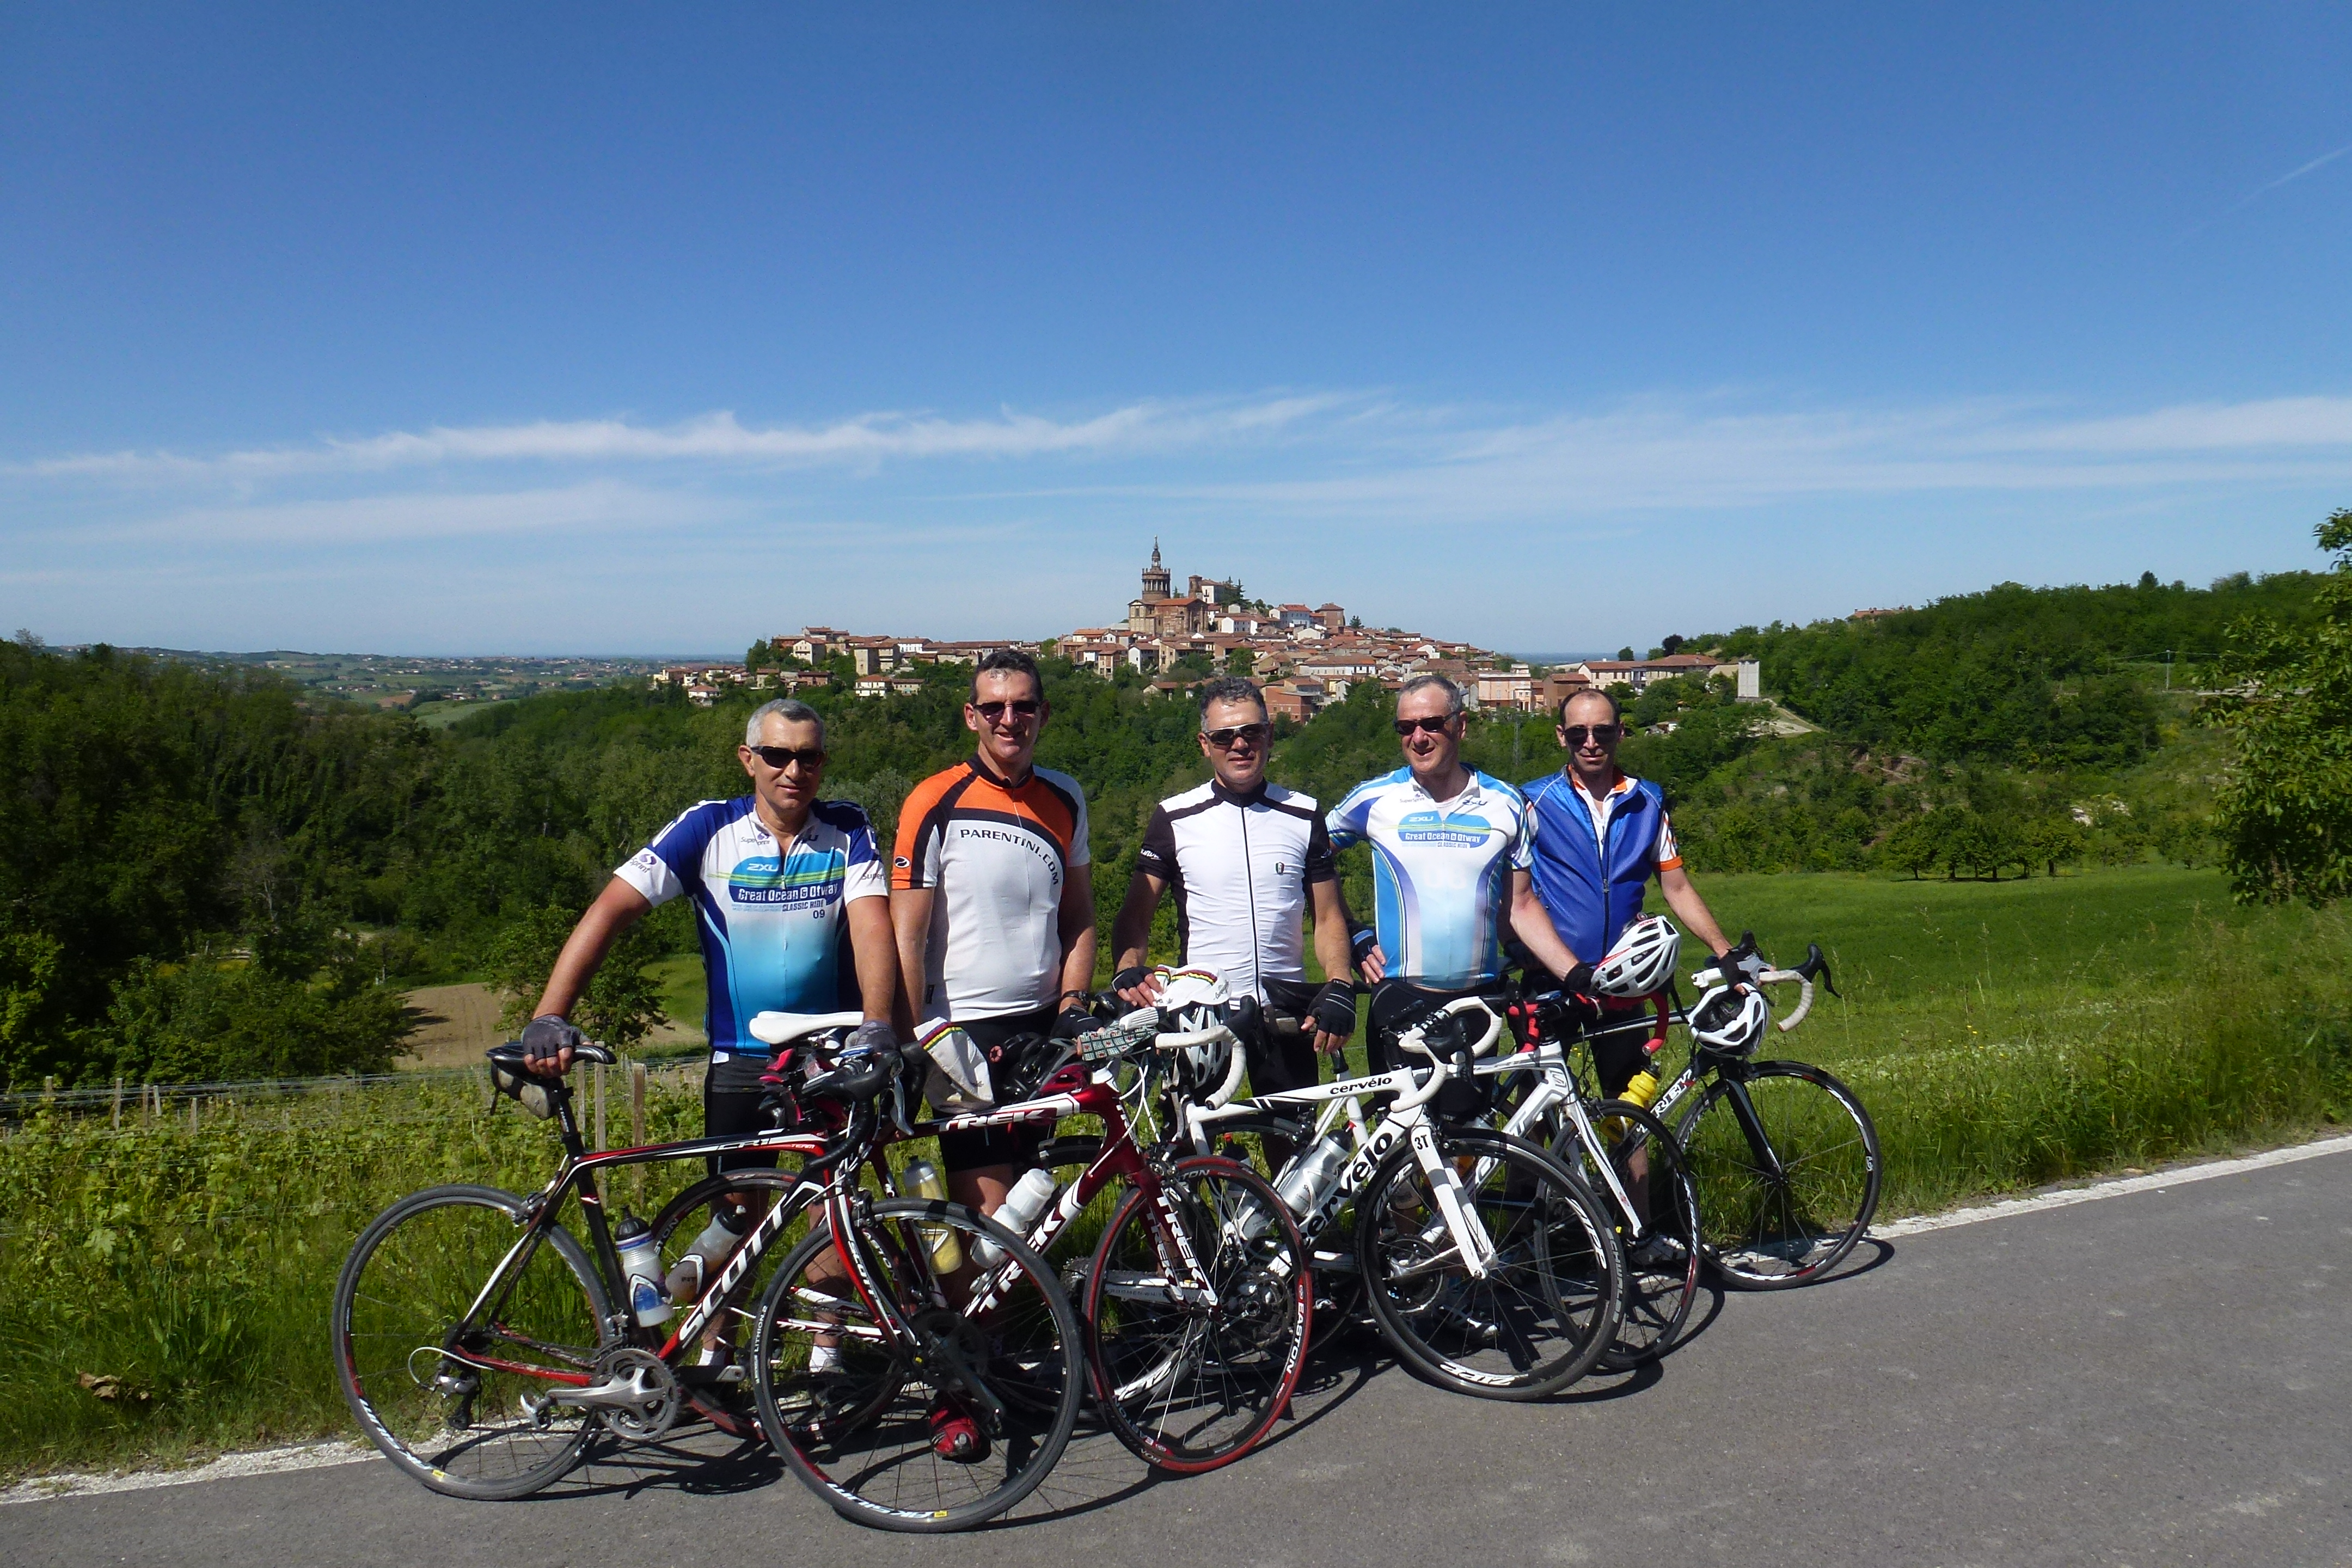 Cyclomundo cyclists' Piedmont group photo